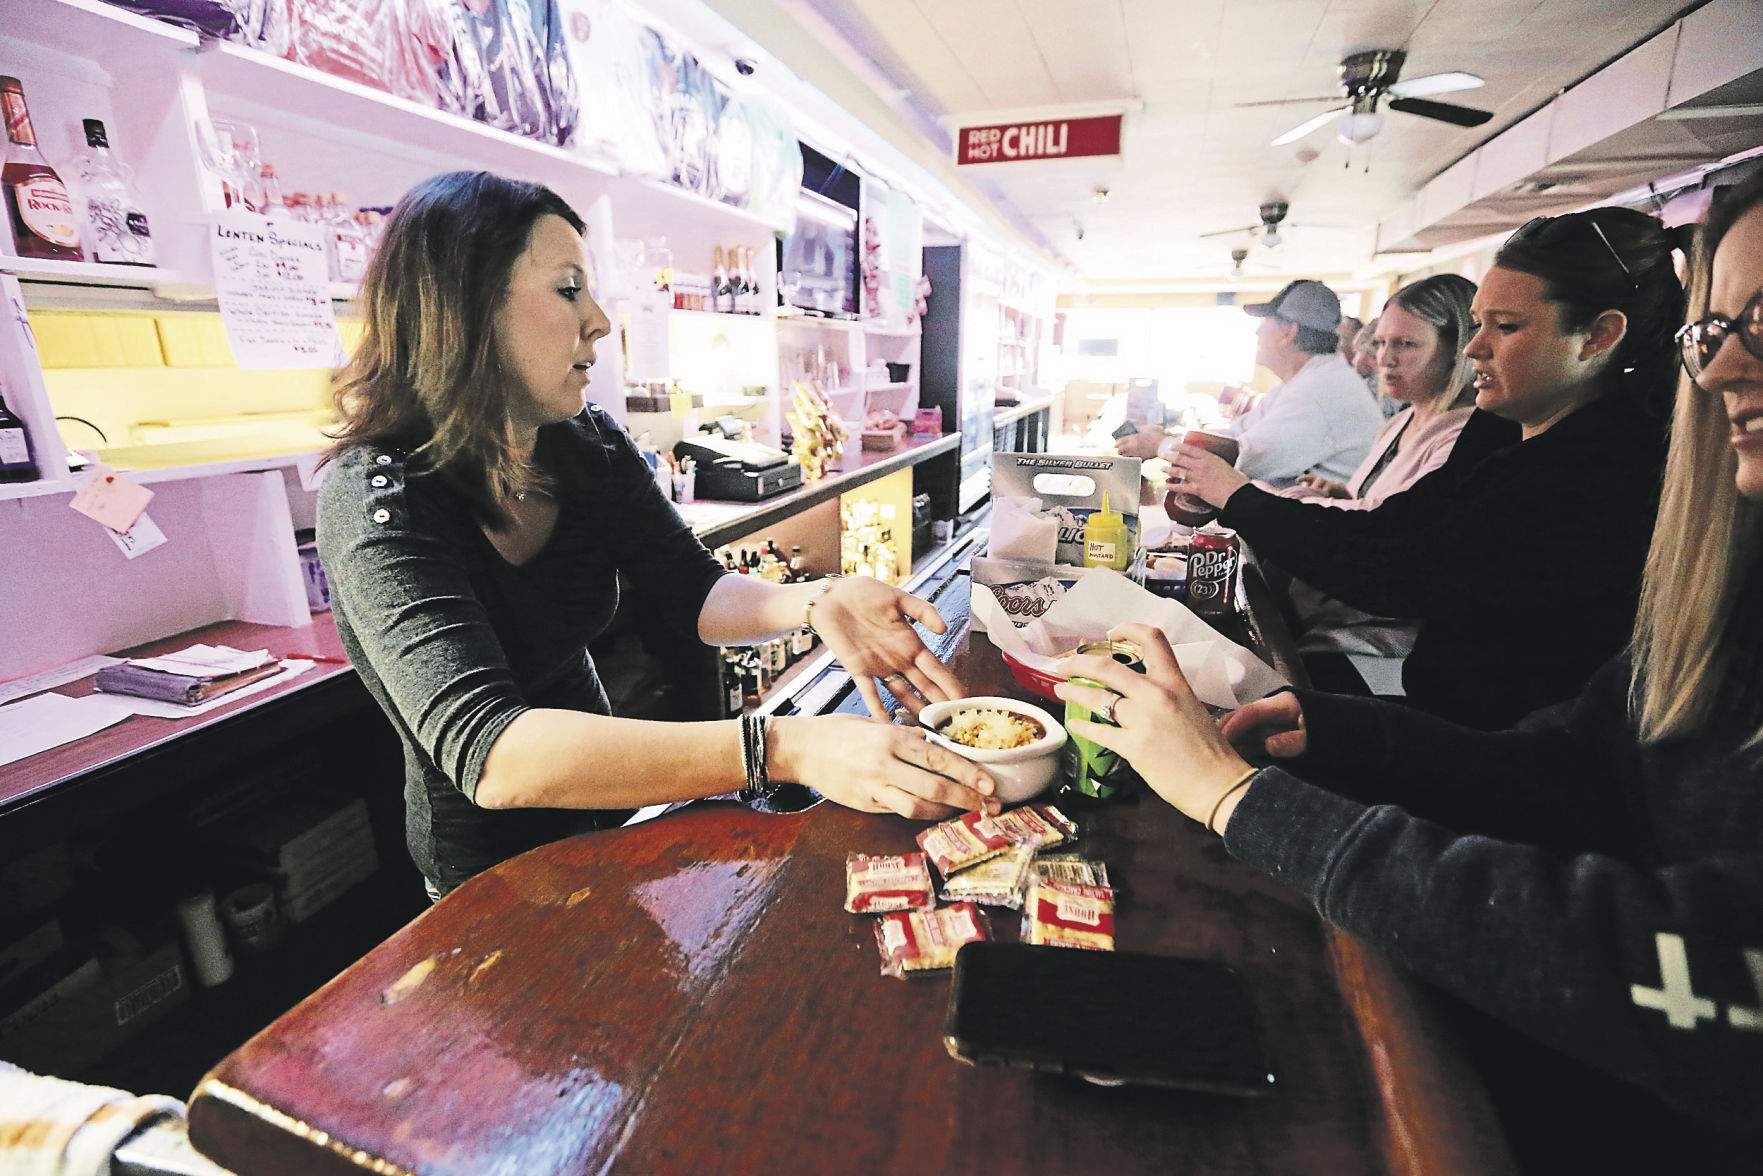 Terissa Ohnesorge (left) serves customers at Mulgrew’s Tavern, Slots & Liquor Store in East Dubuque, Ill. PHOTO CREDIT: NICKI KOHL